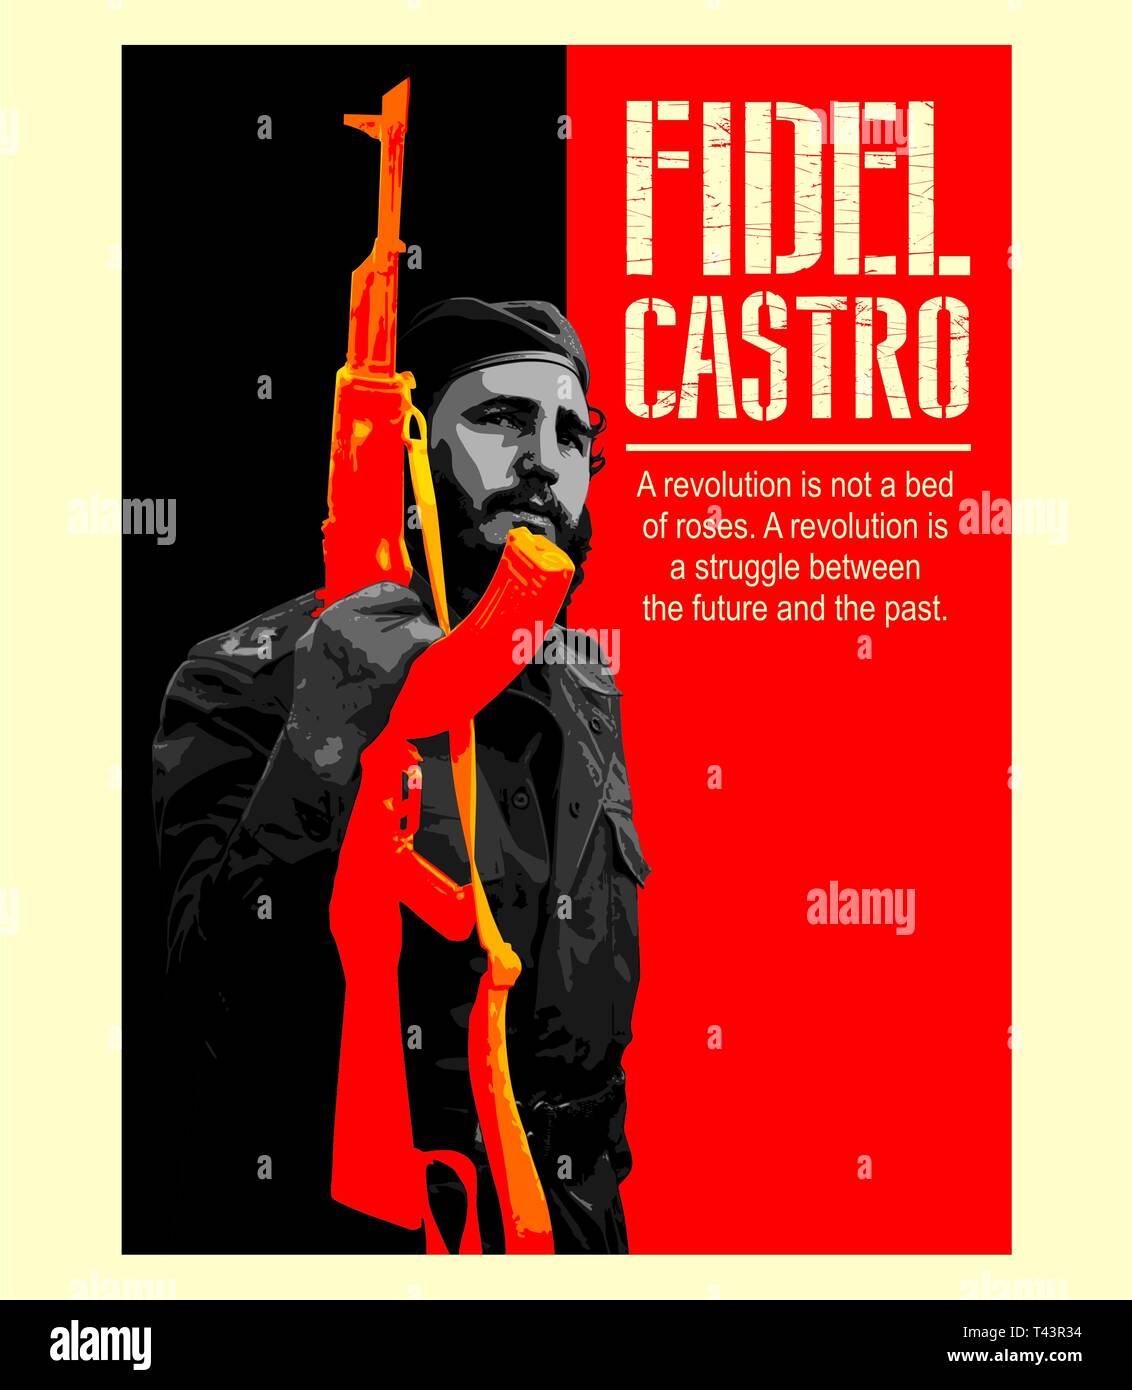 Fidel Castro illustration - poster Stock Photo